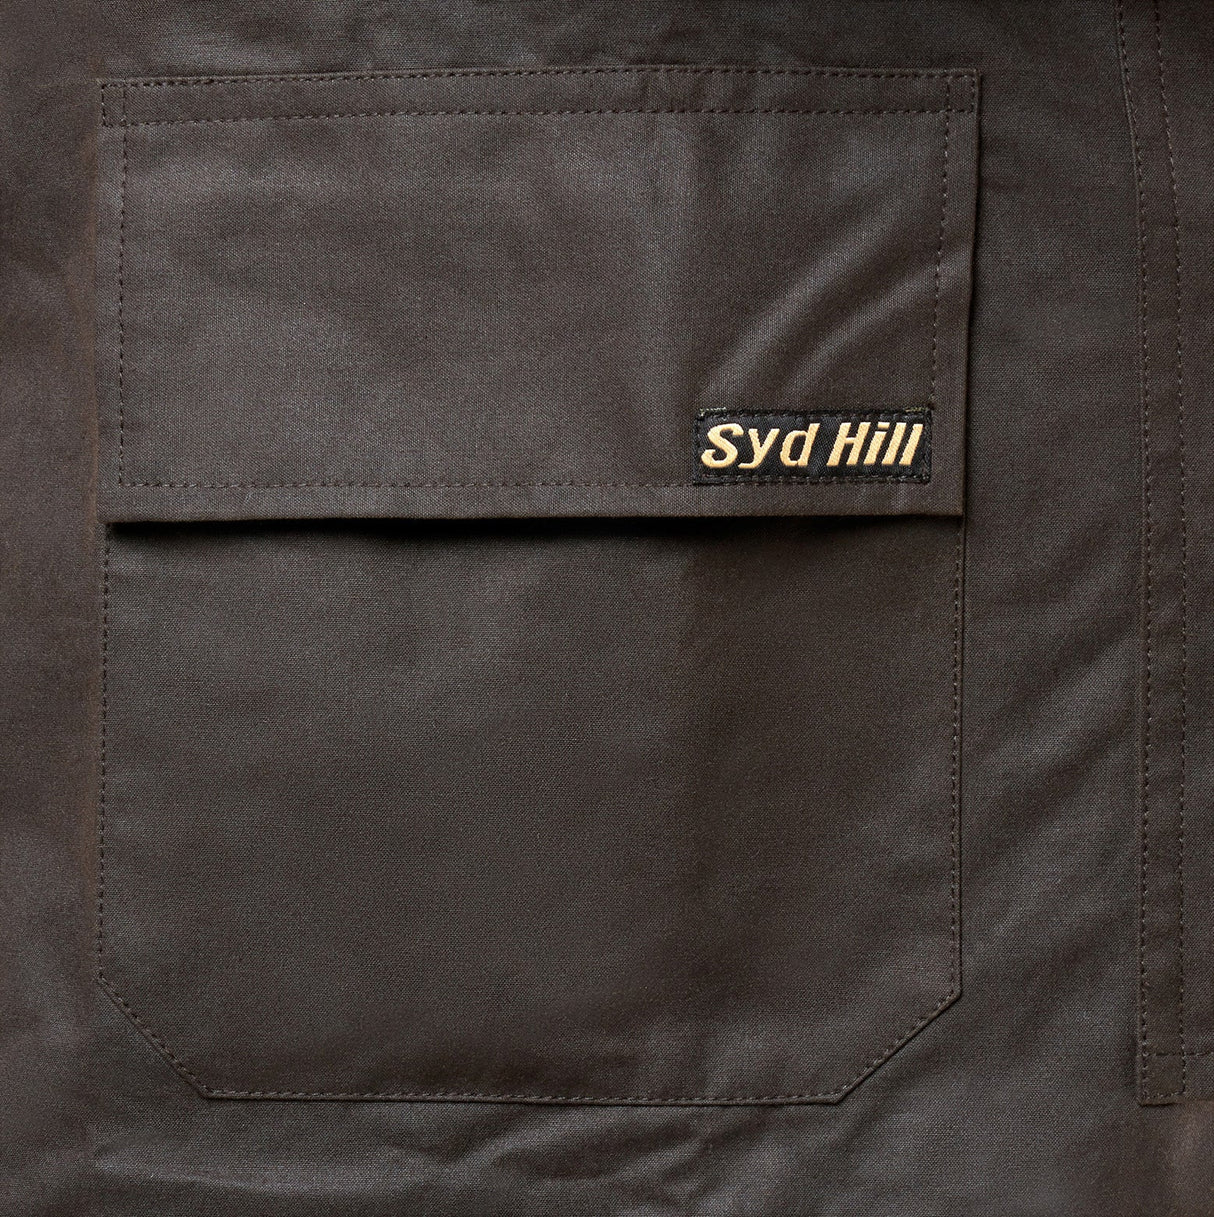 Syd Hill 3/4 Length Oilskin Coat - XL